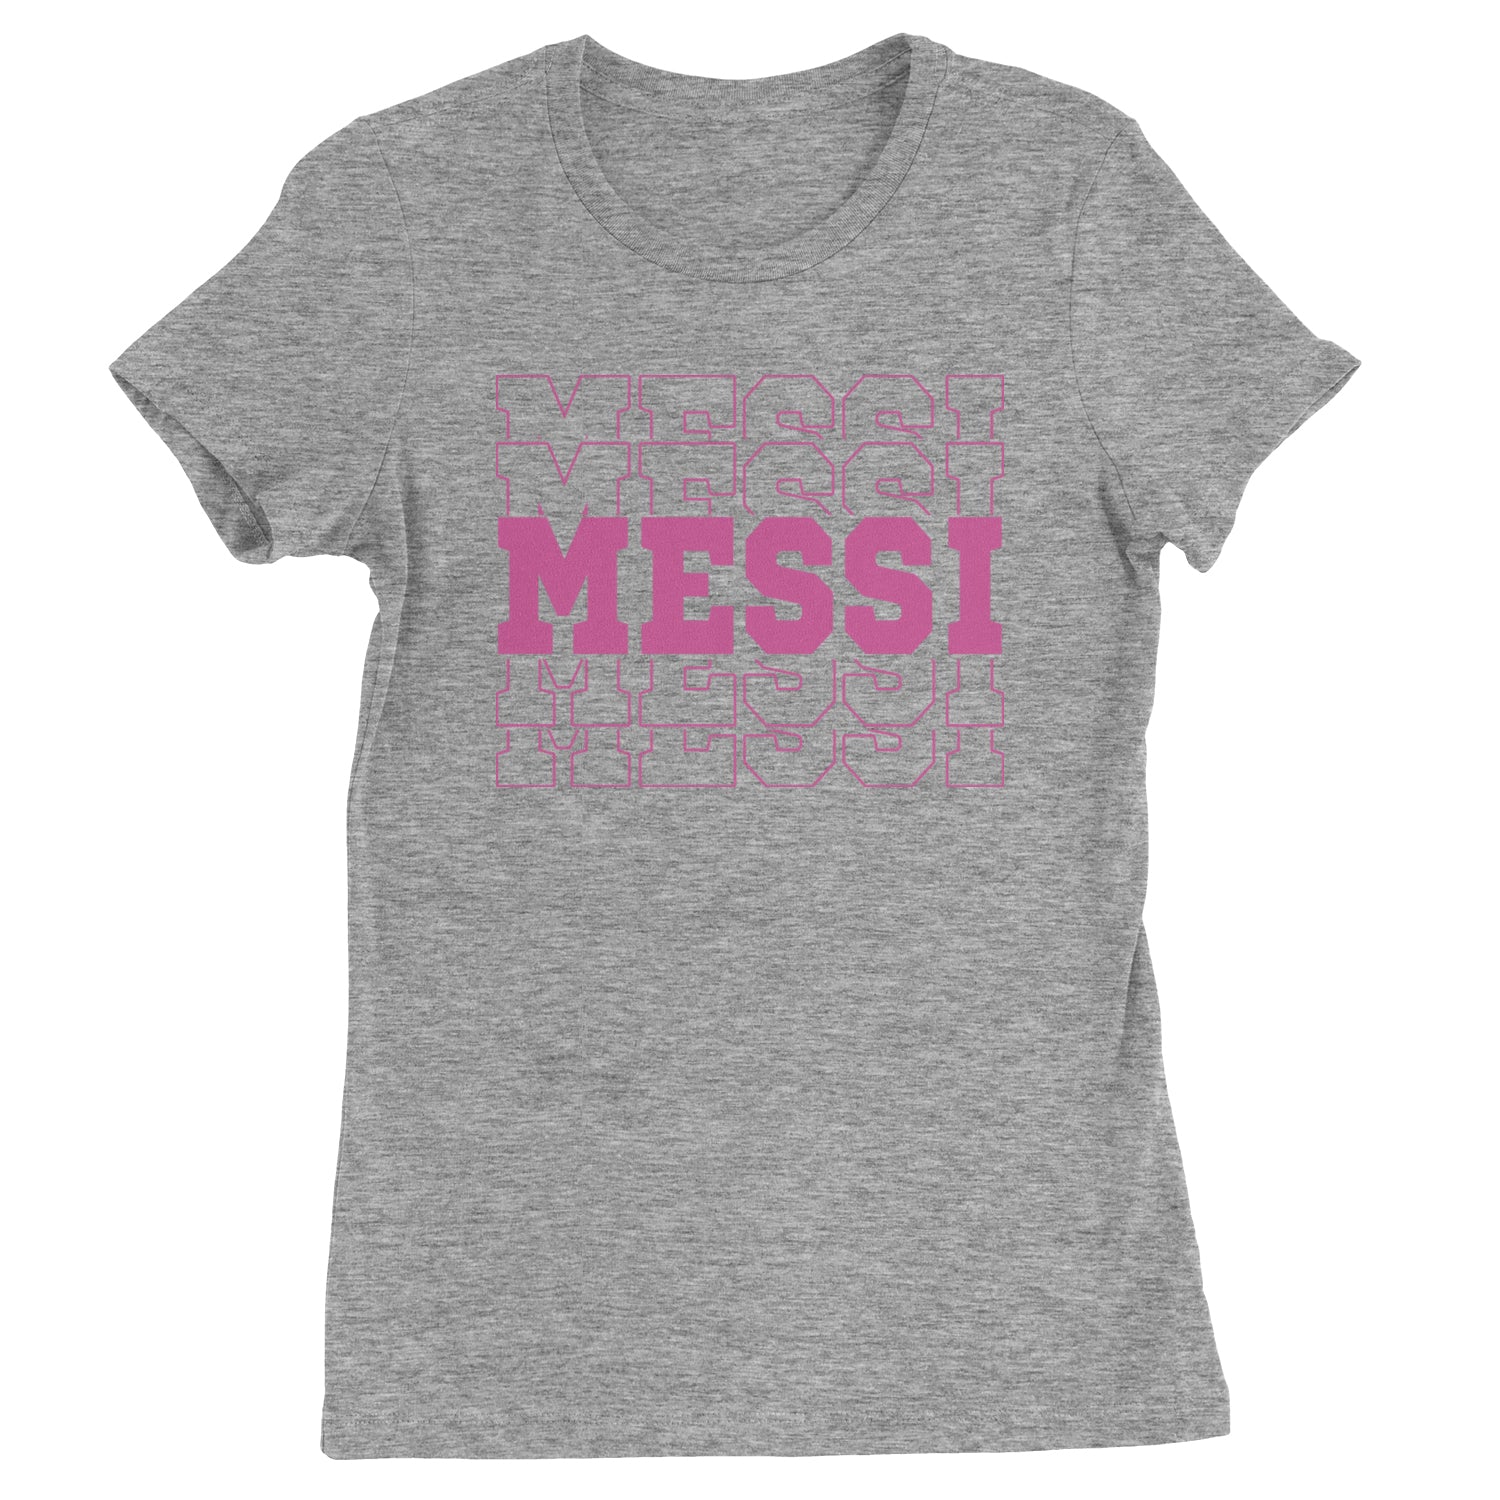 Messi Miami Futbol Womens T-shirt